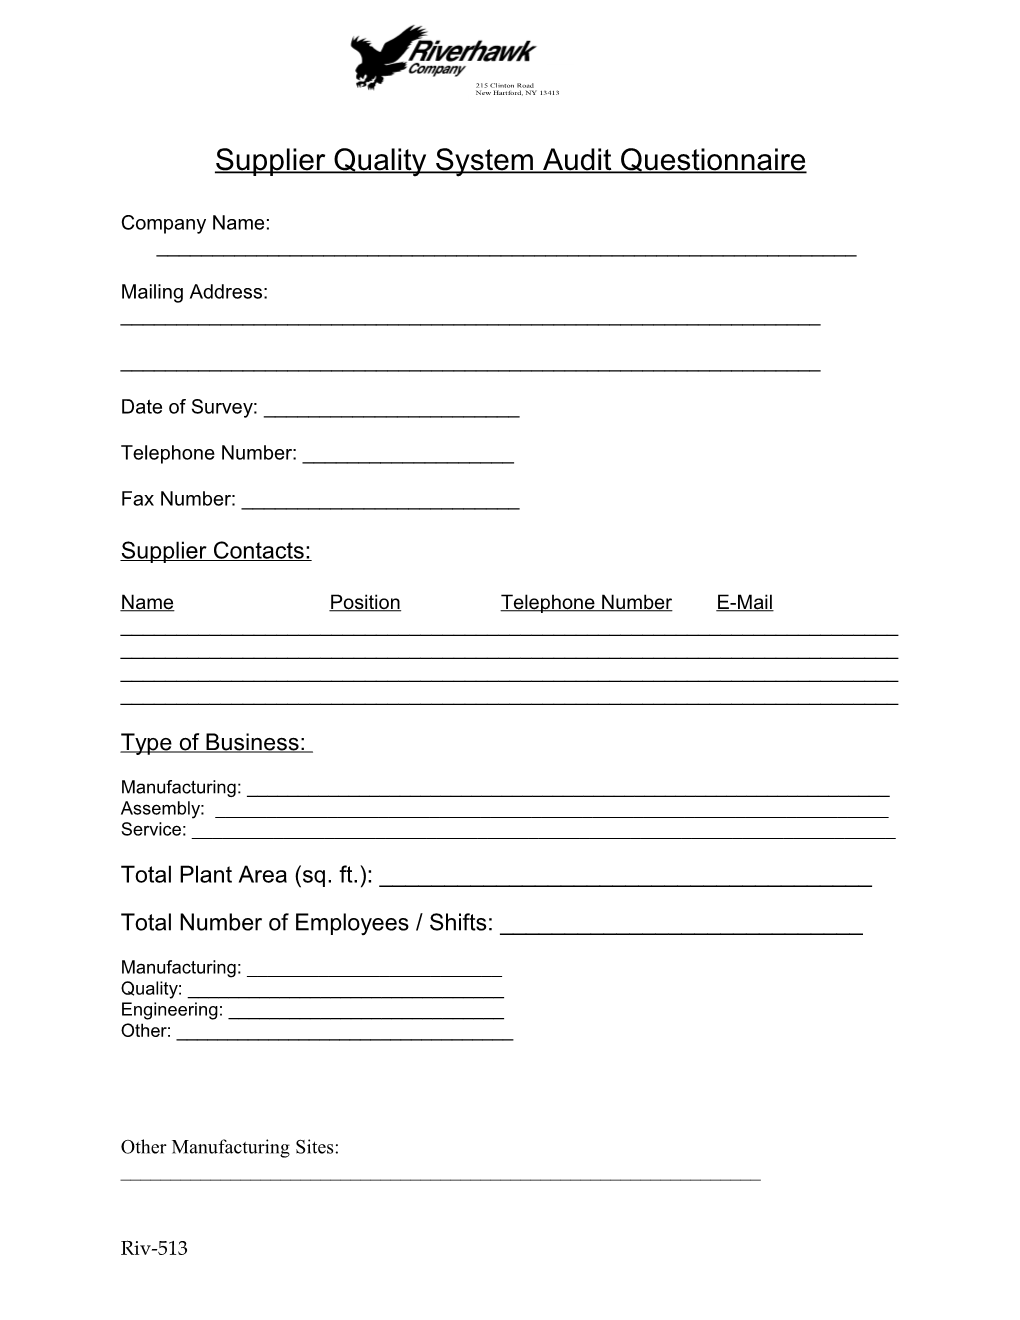 Supplier Quality System Audit Questionnaire